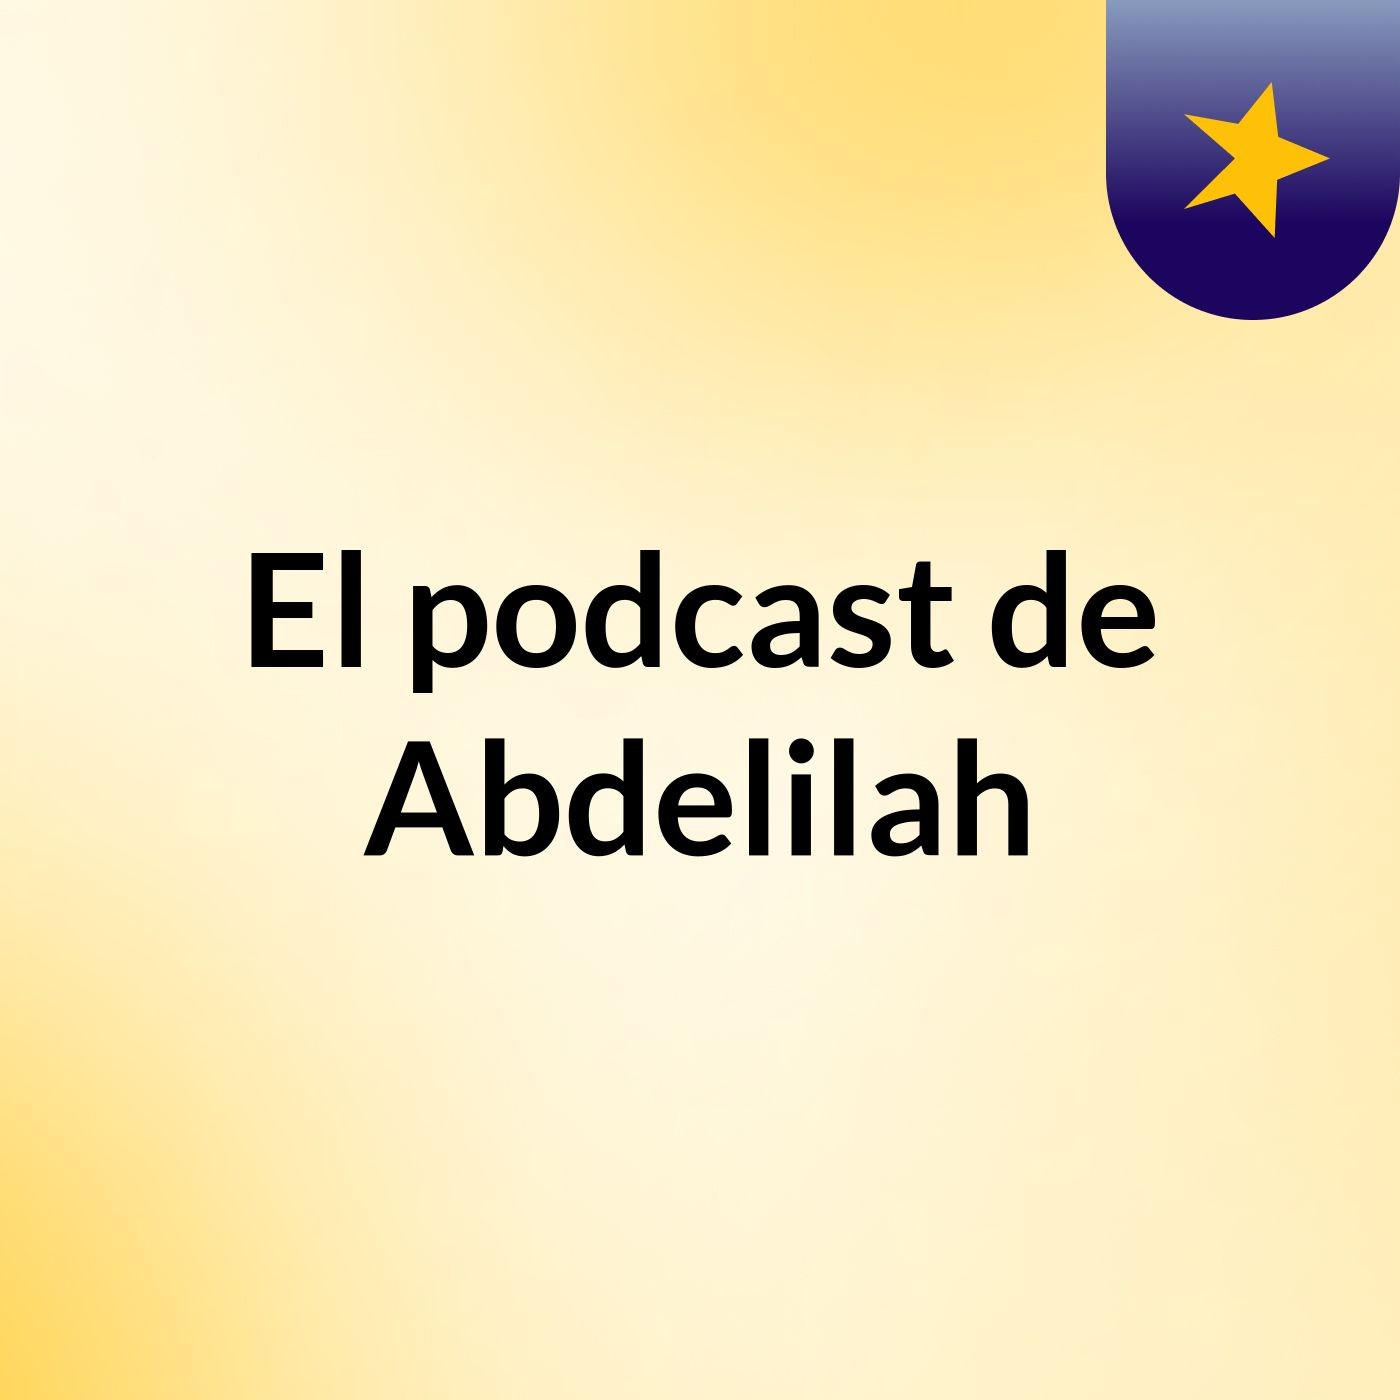 El podcast de Abdelilah